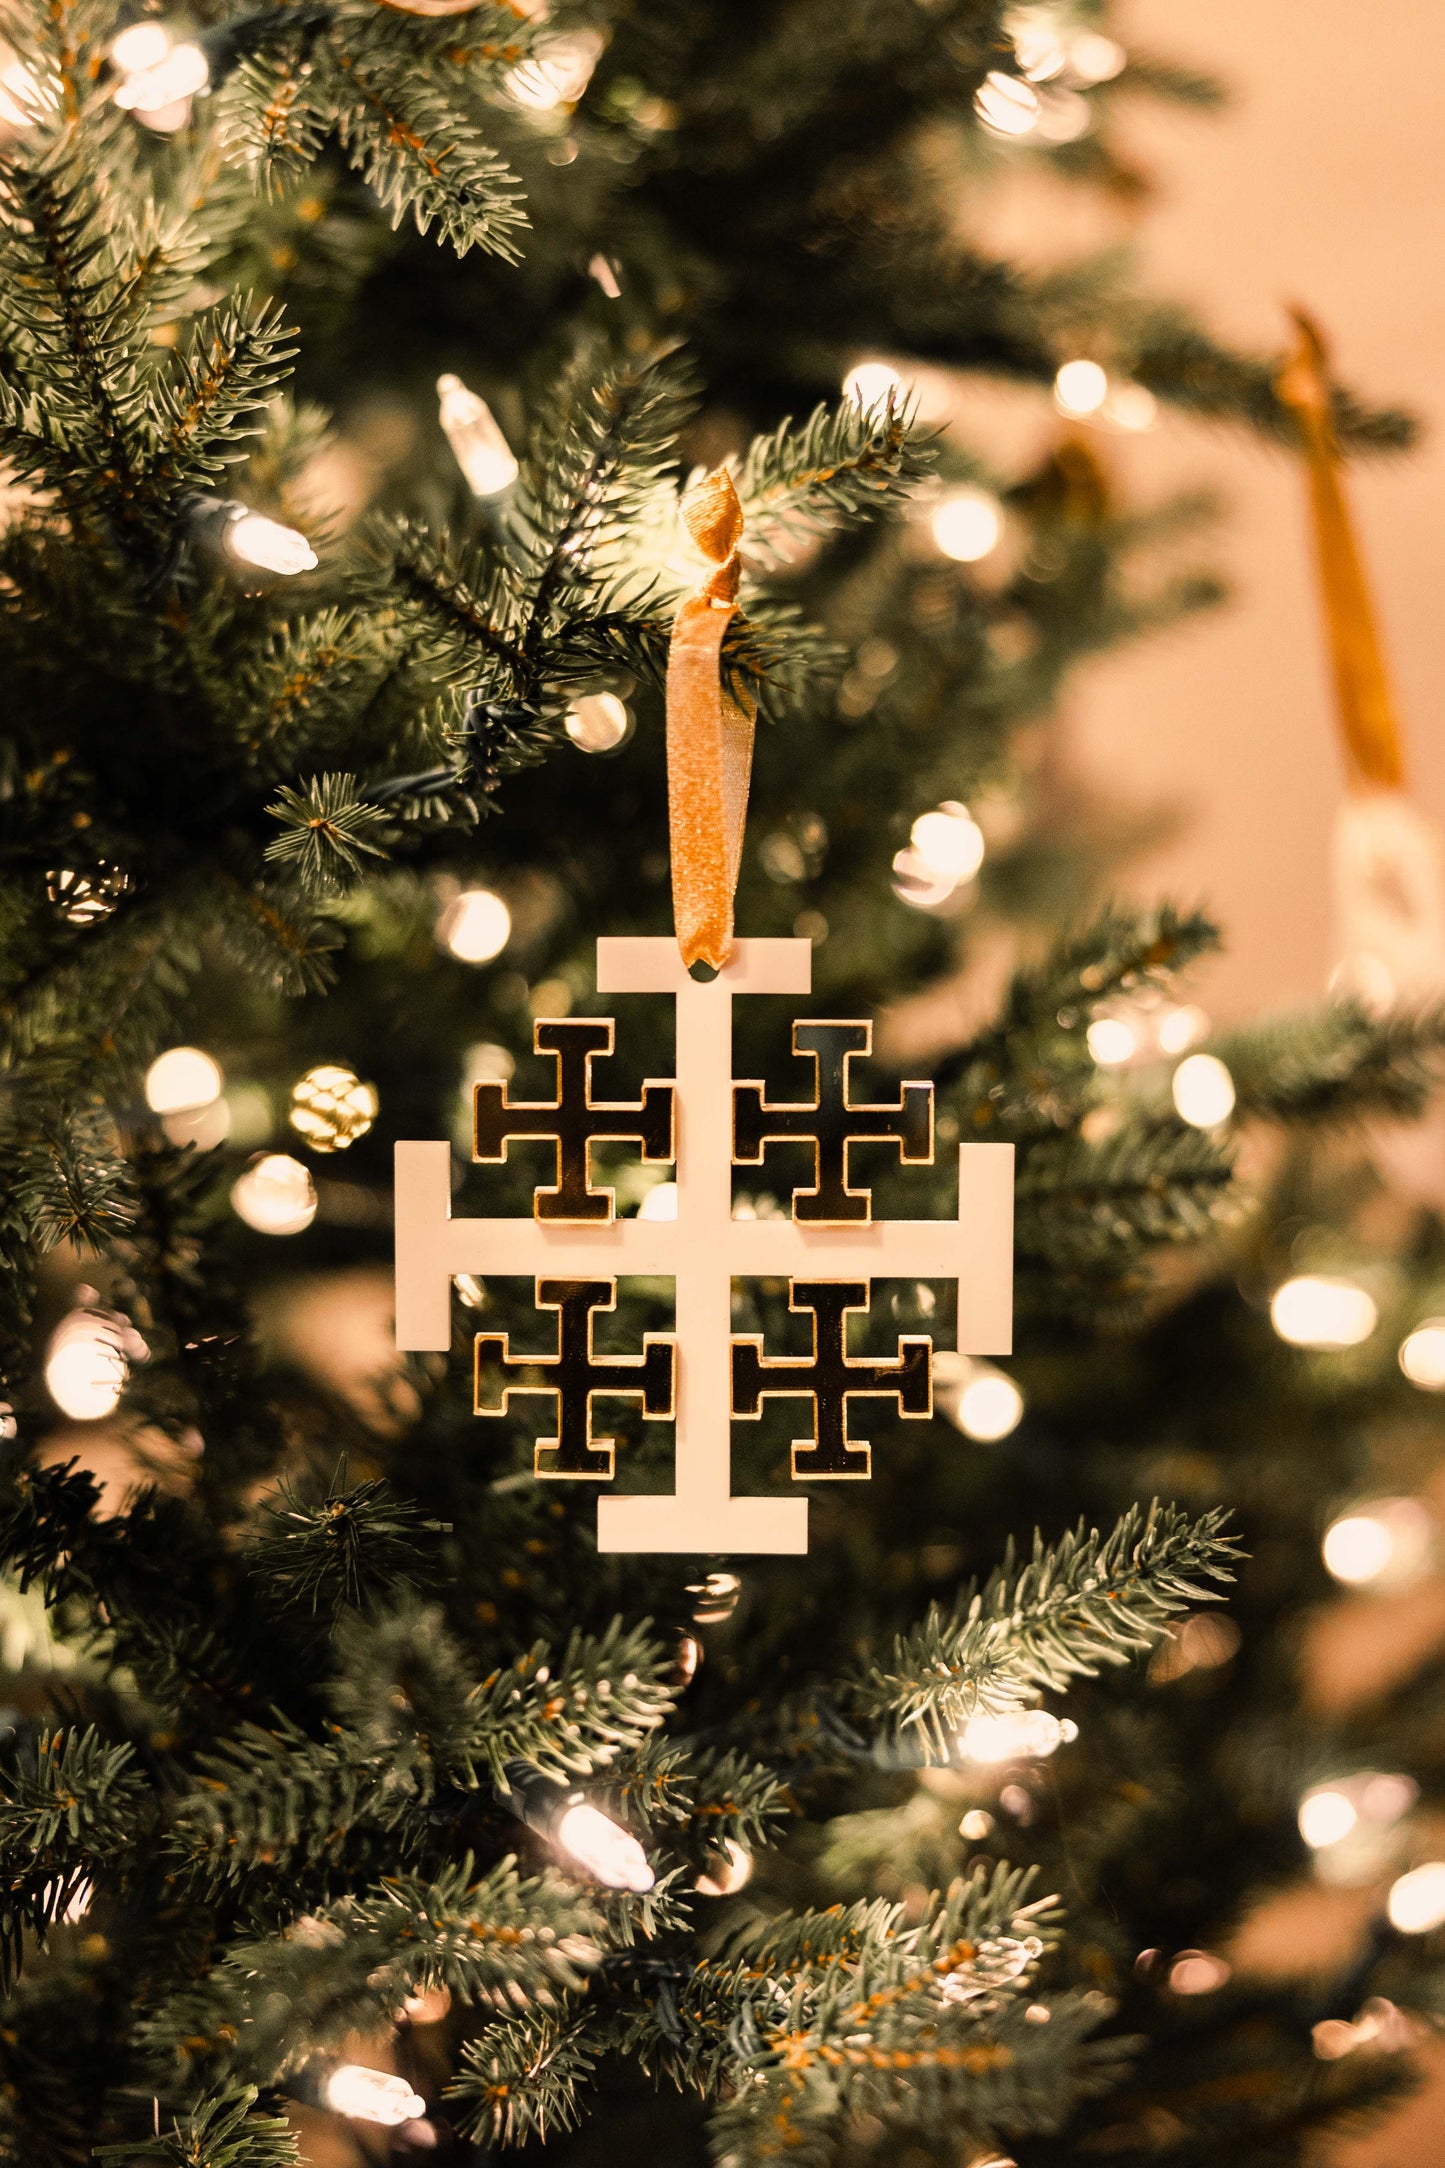 Jerusalem Cross Chrismon Ornament